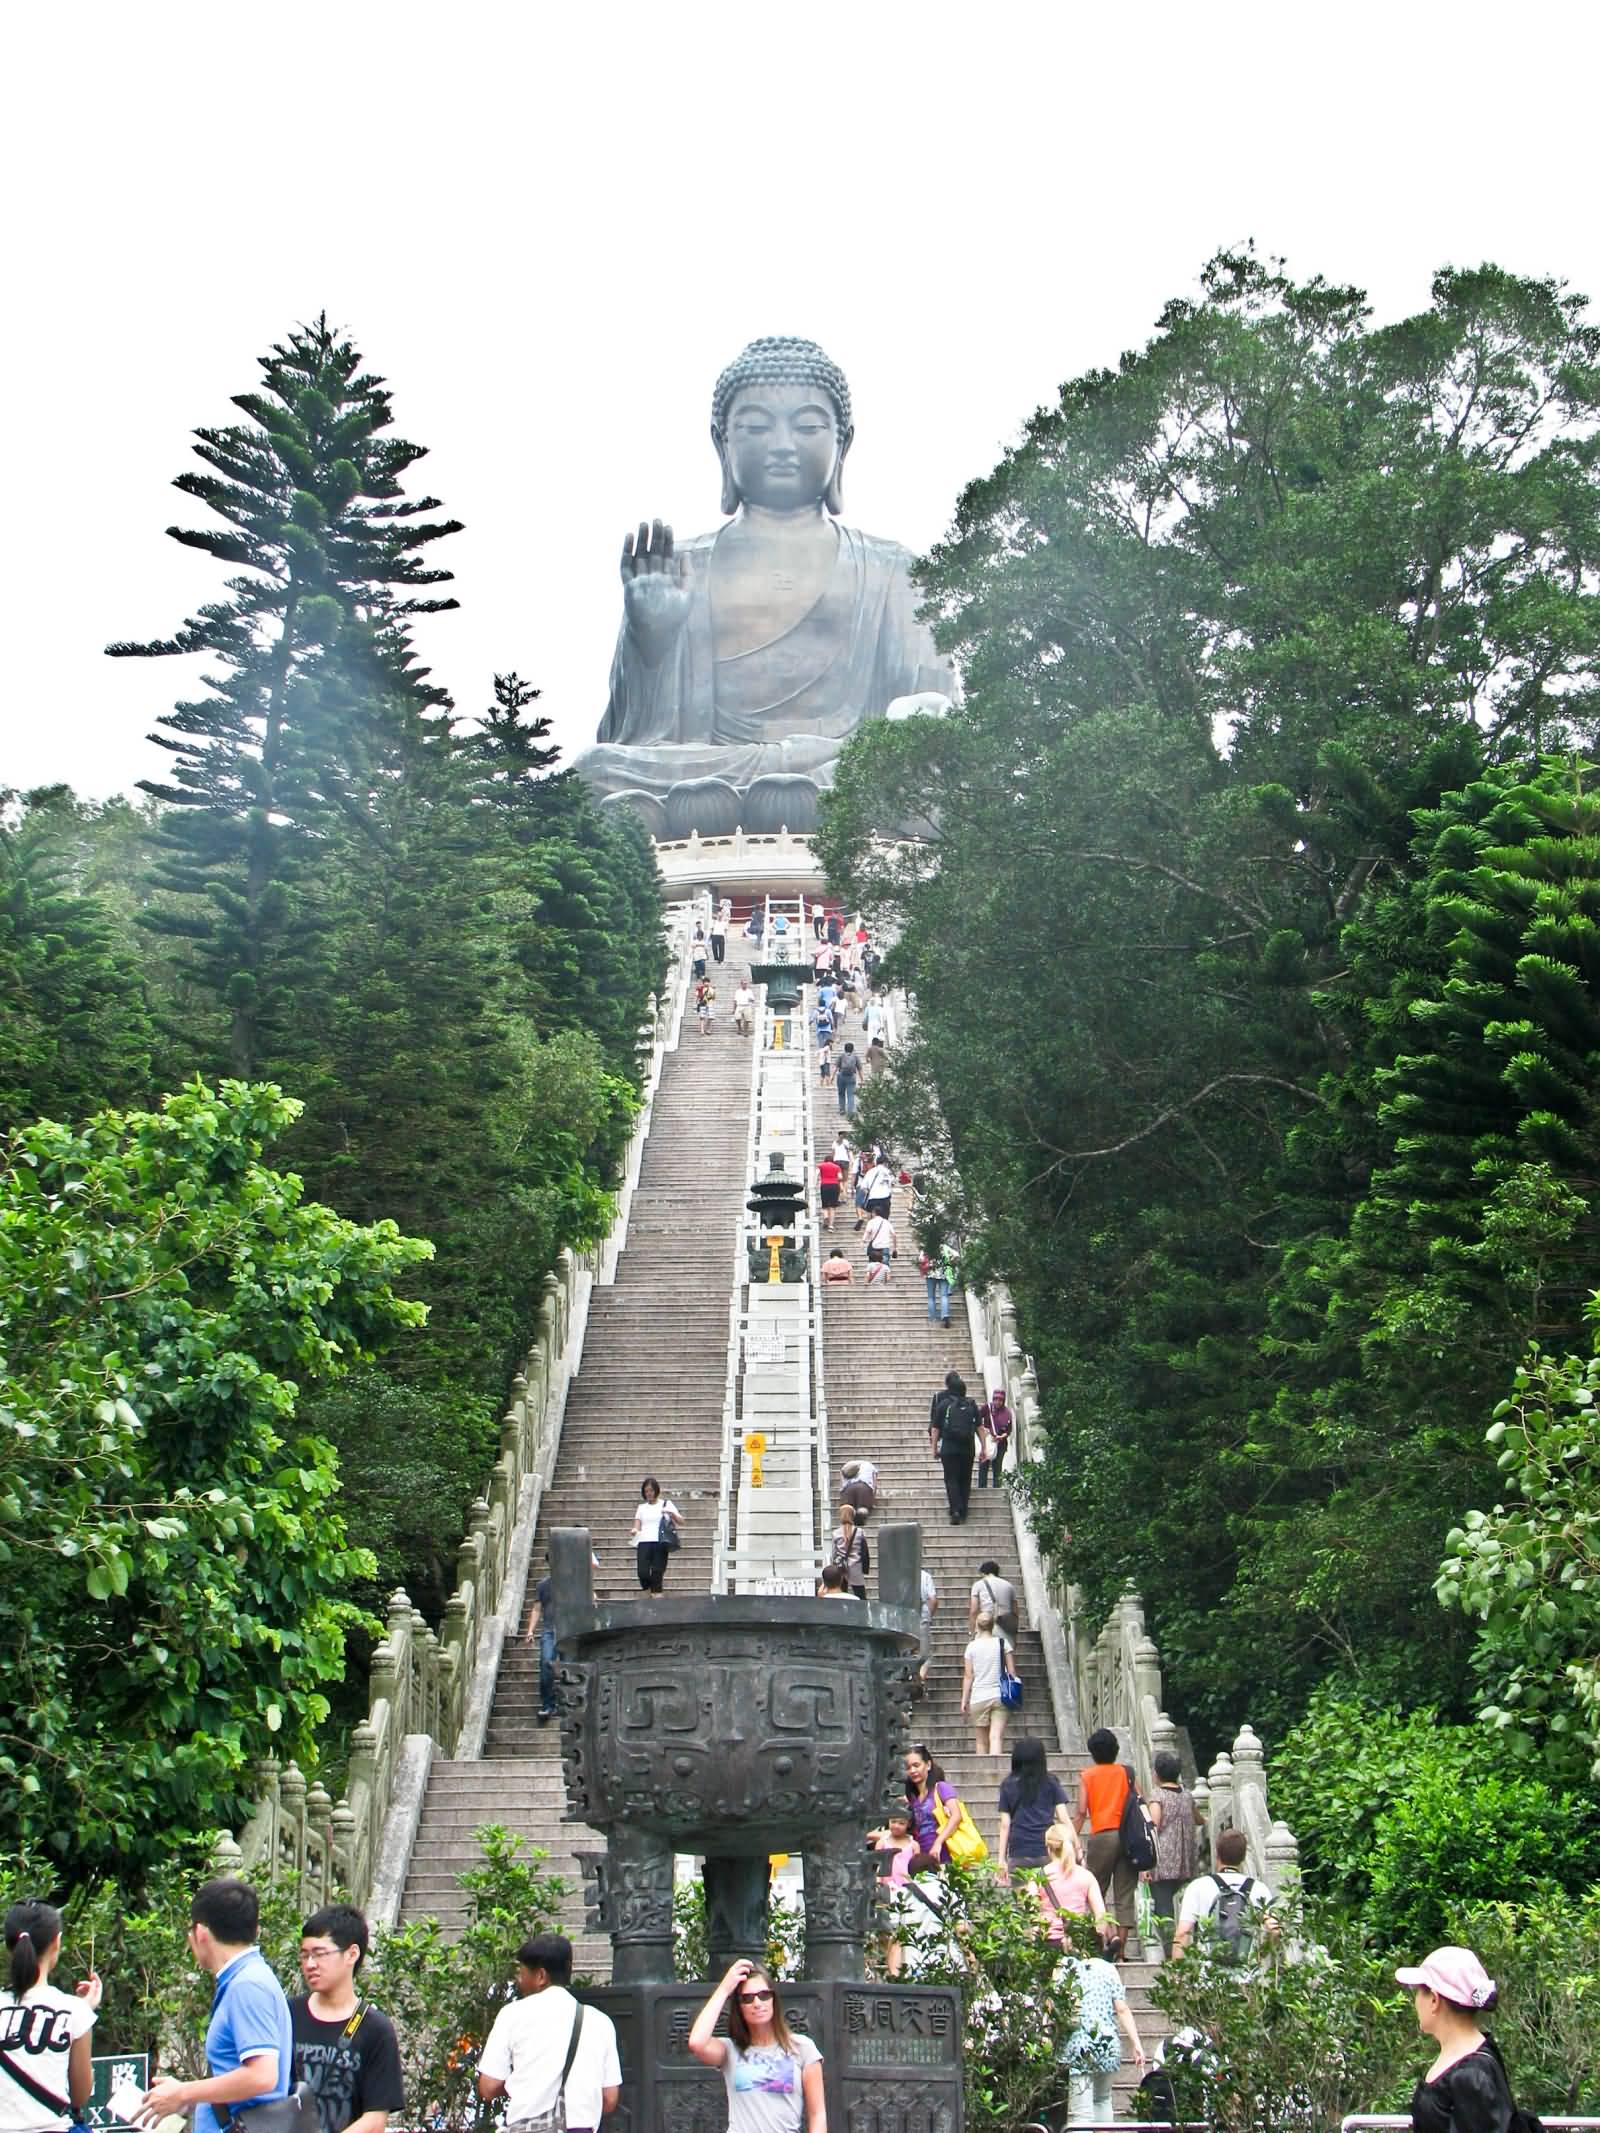 Steps Way To The Tian Tan Buddha